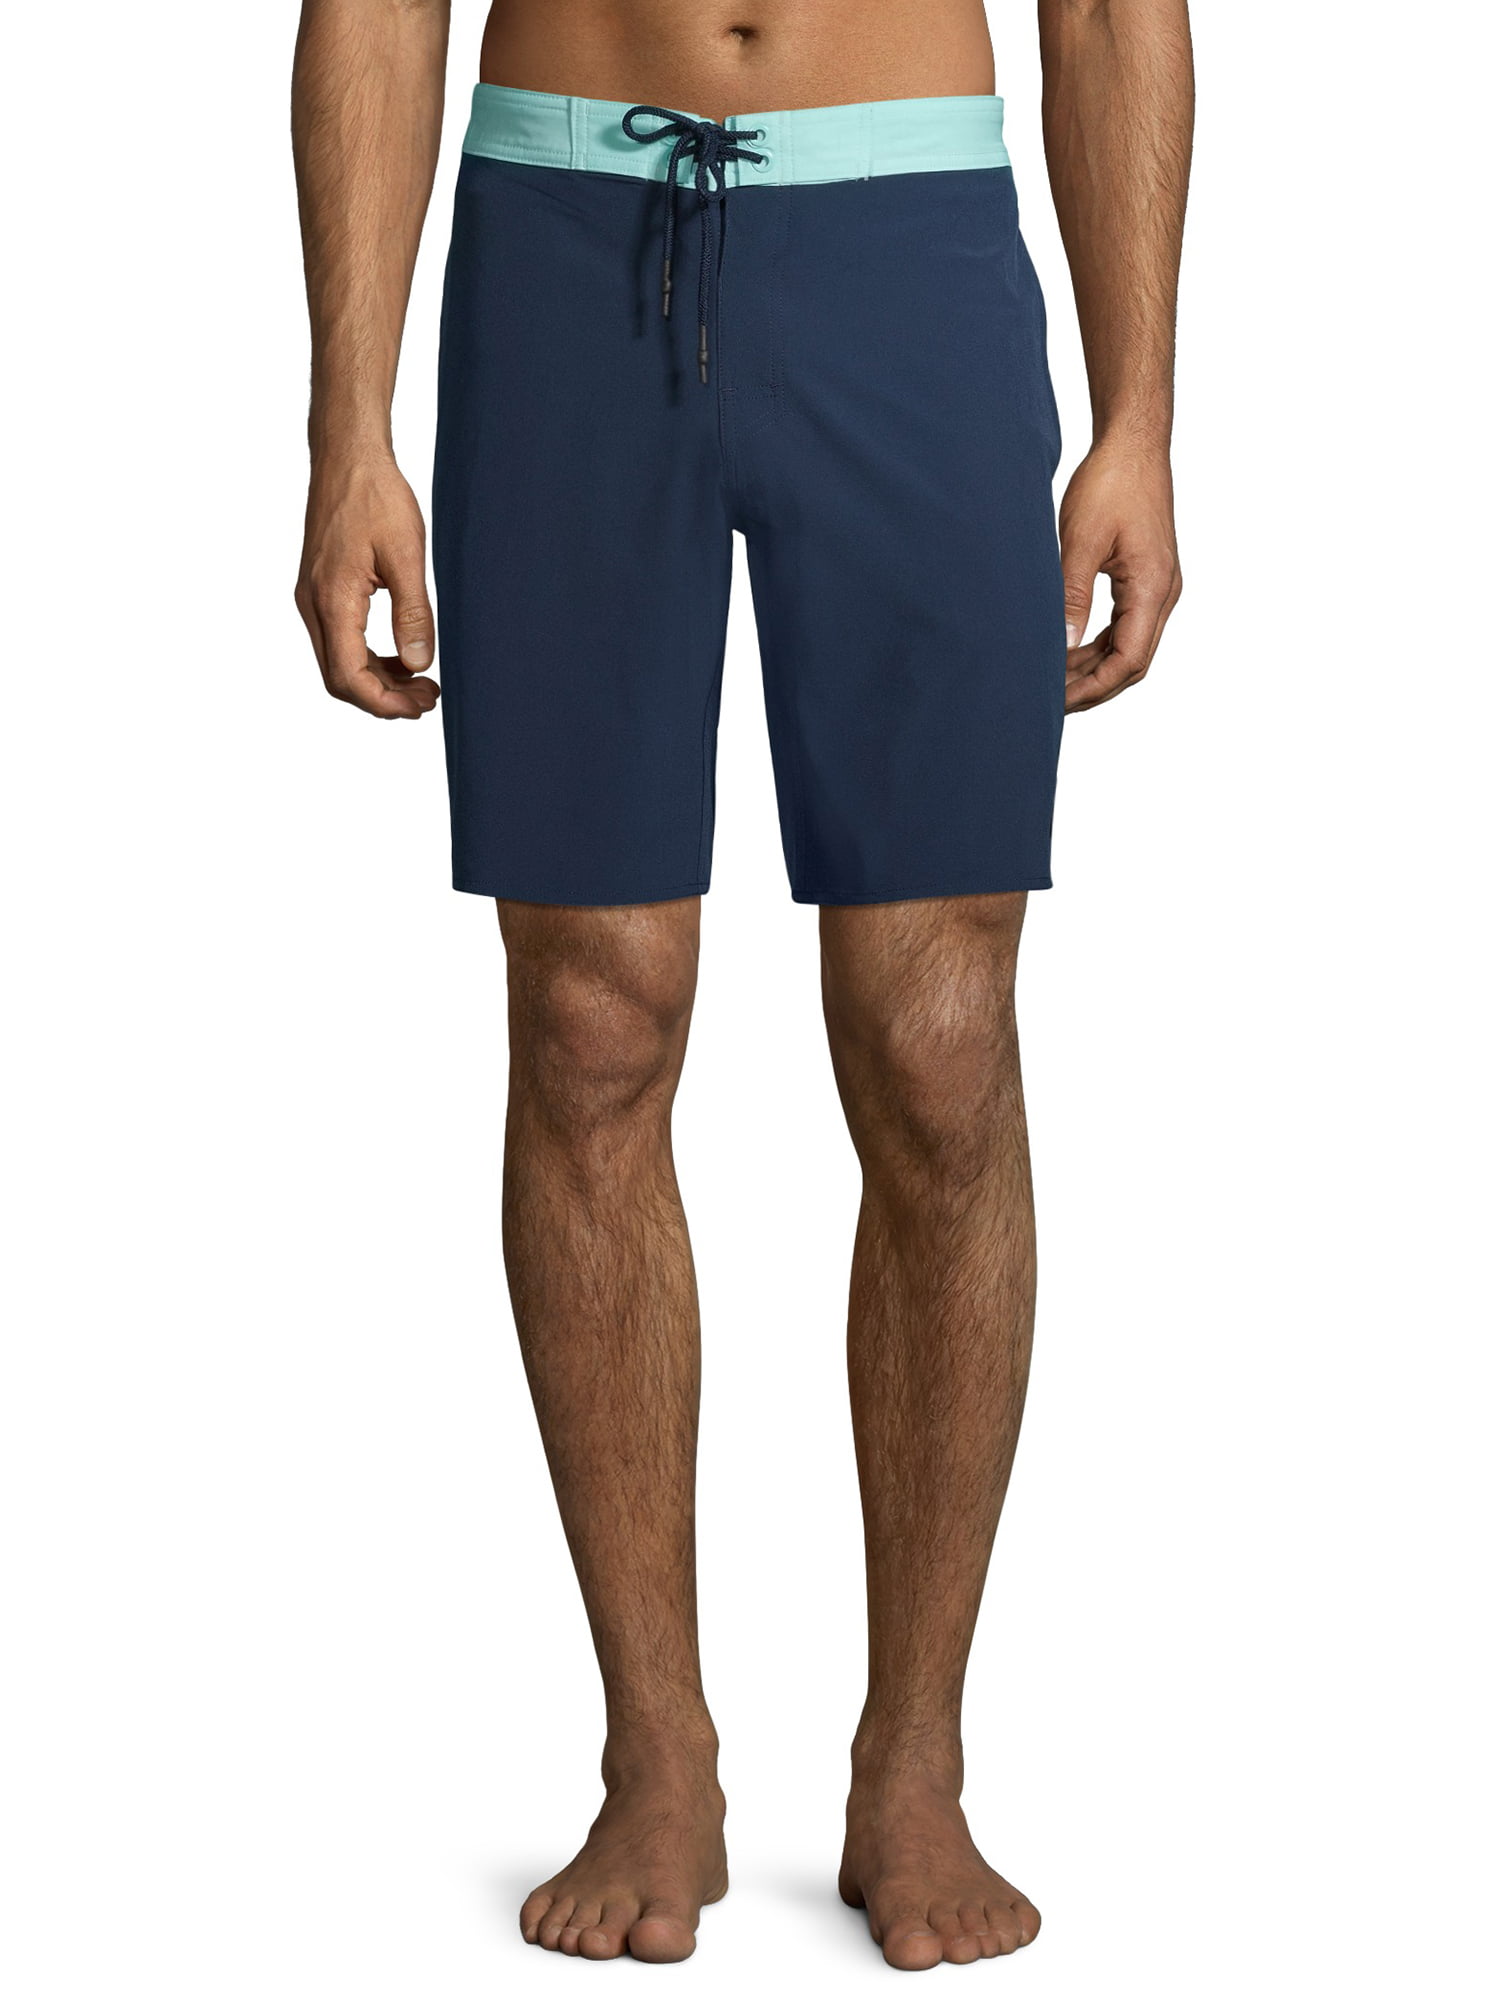 Bud Light Mens Swim Trunks Summer Quick Dry Board Shorts Elastic Waist Swimwear Bathing Suit with Mesh Lining//Side Pockets